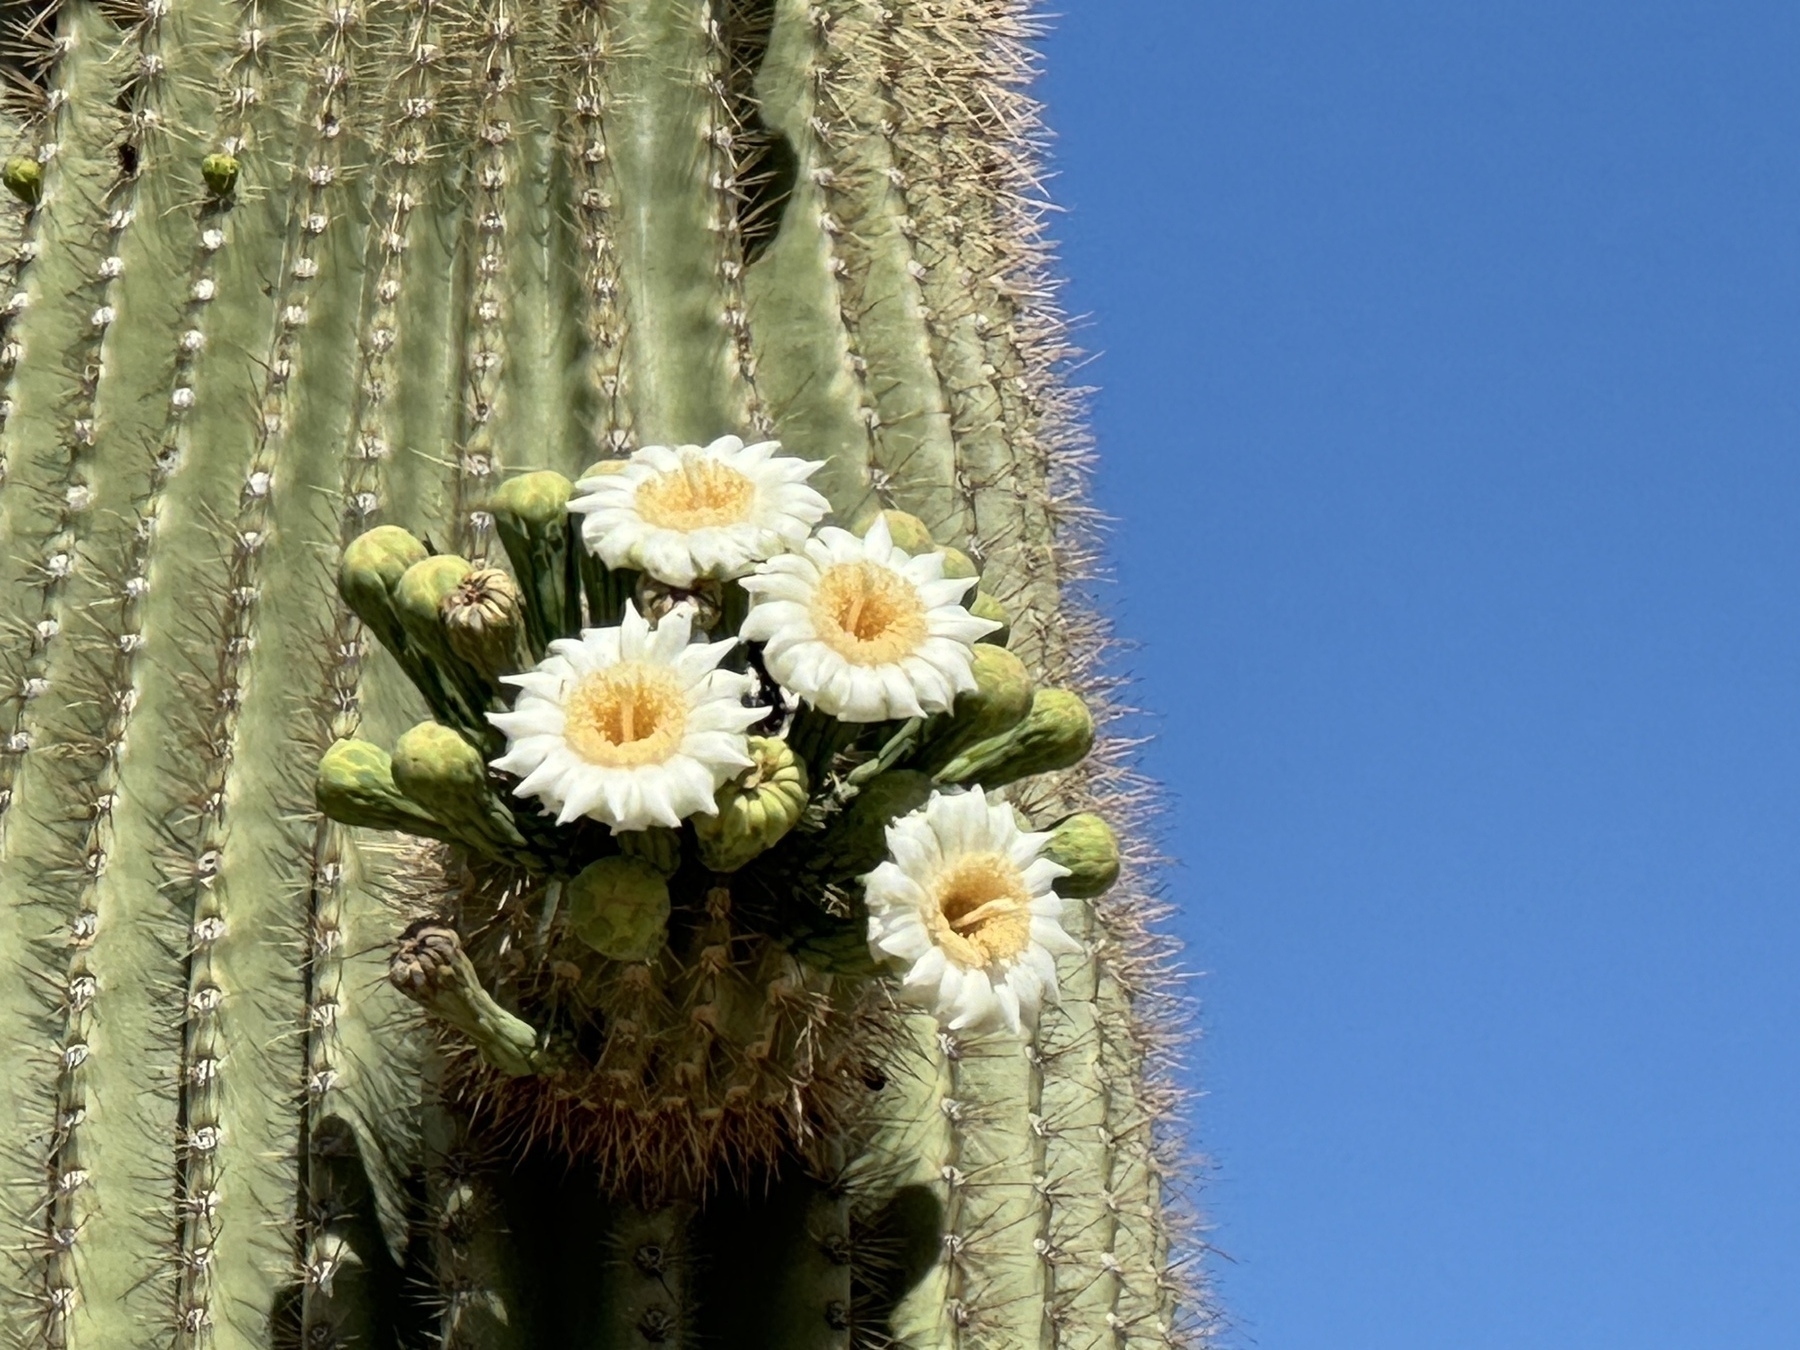 White blooms on a saguaro cactus